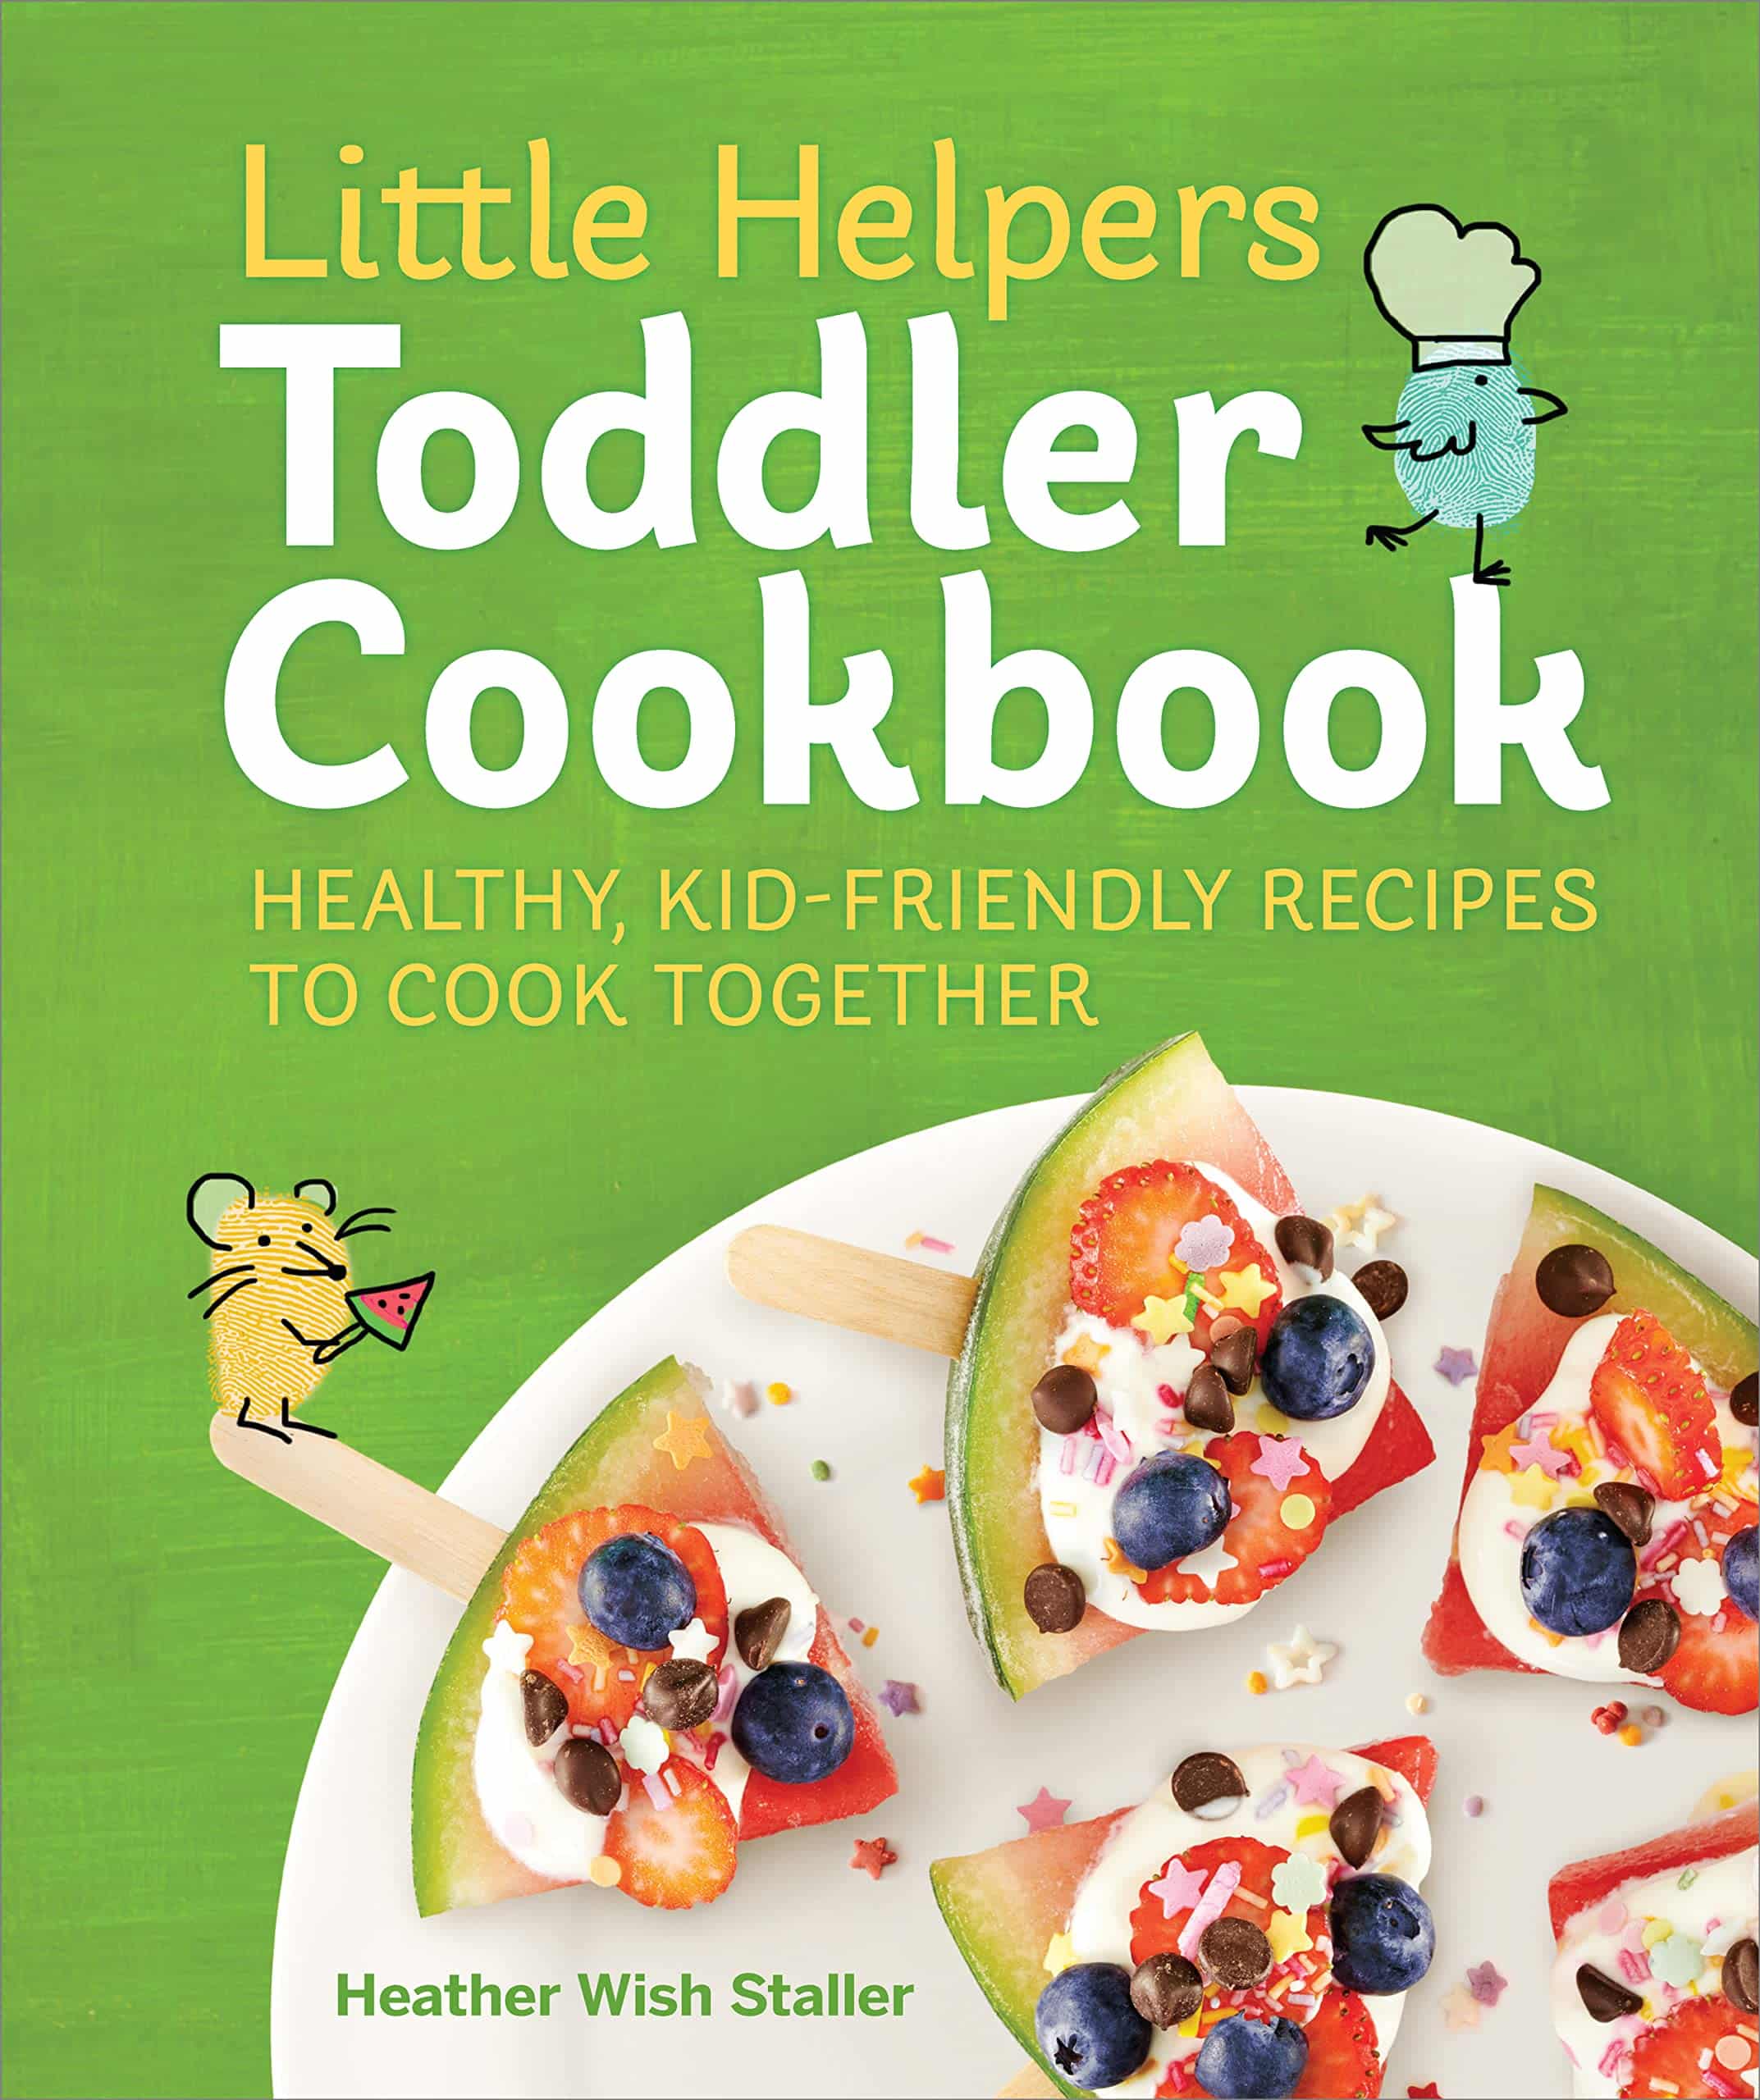 "Little Helpers Toddler Cookbook" by Heather Wish Staller